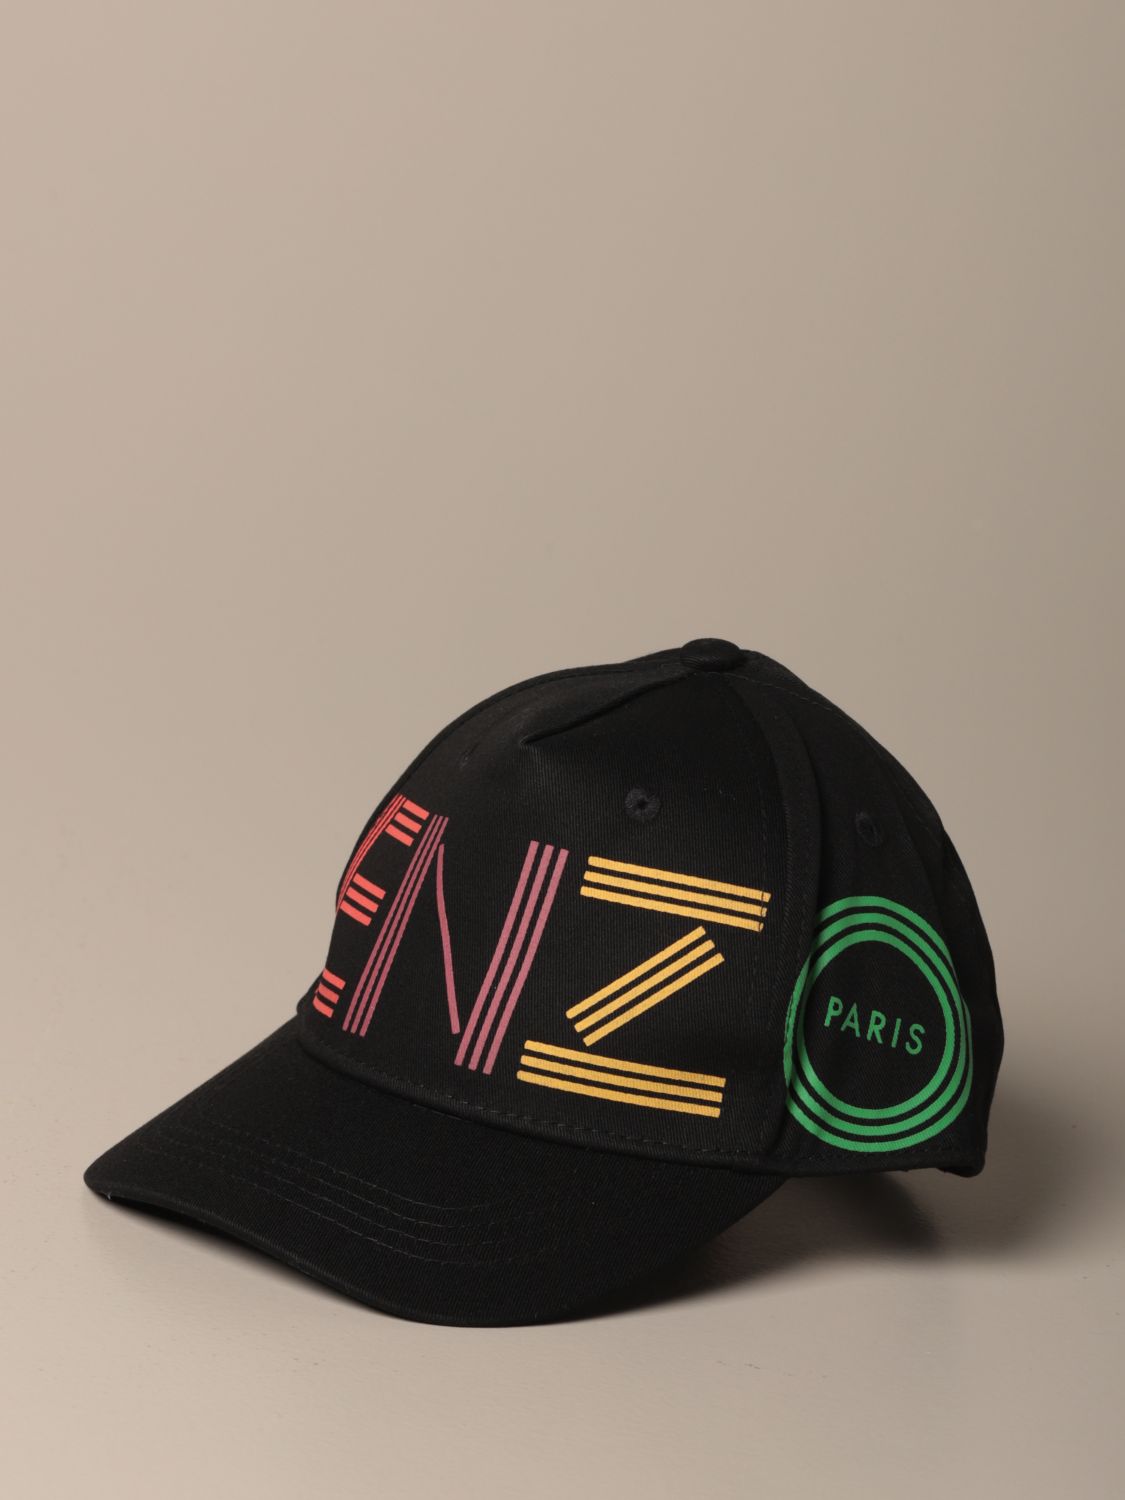 kenzo hat black